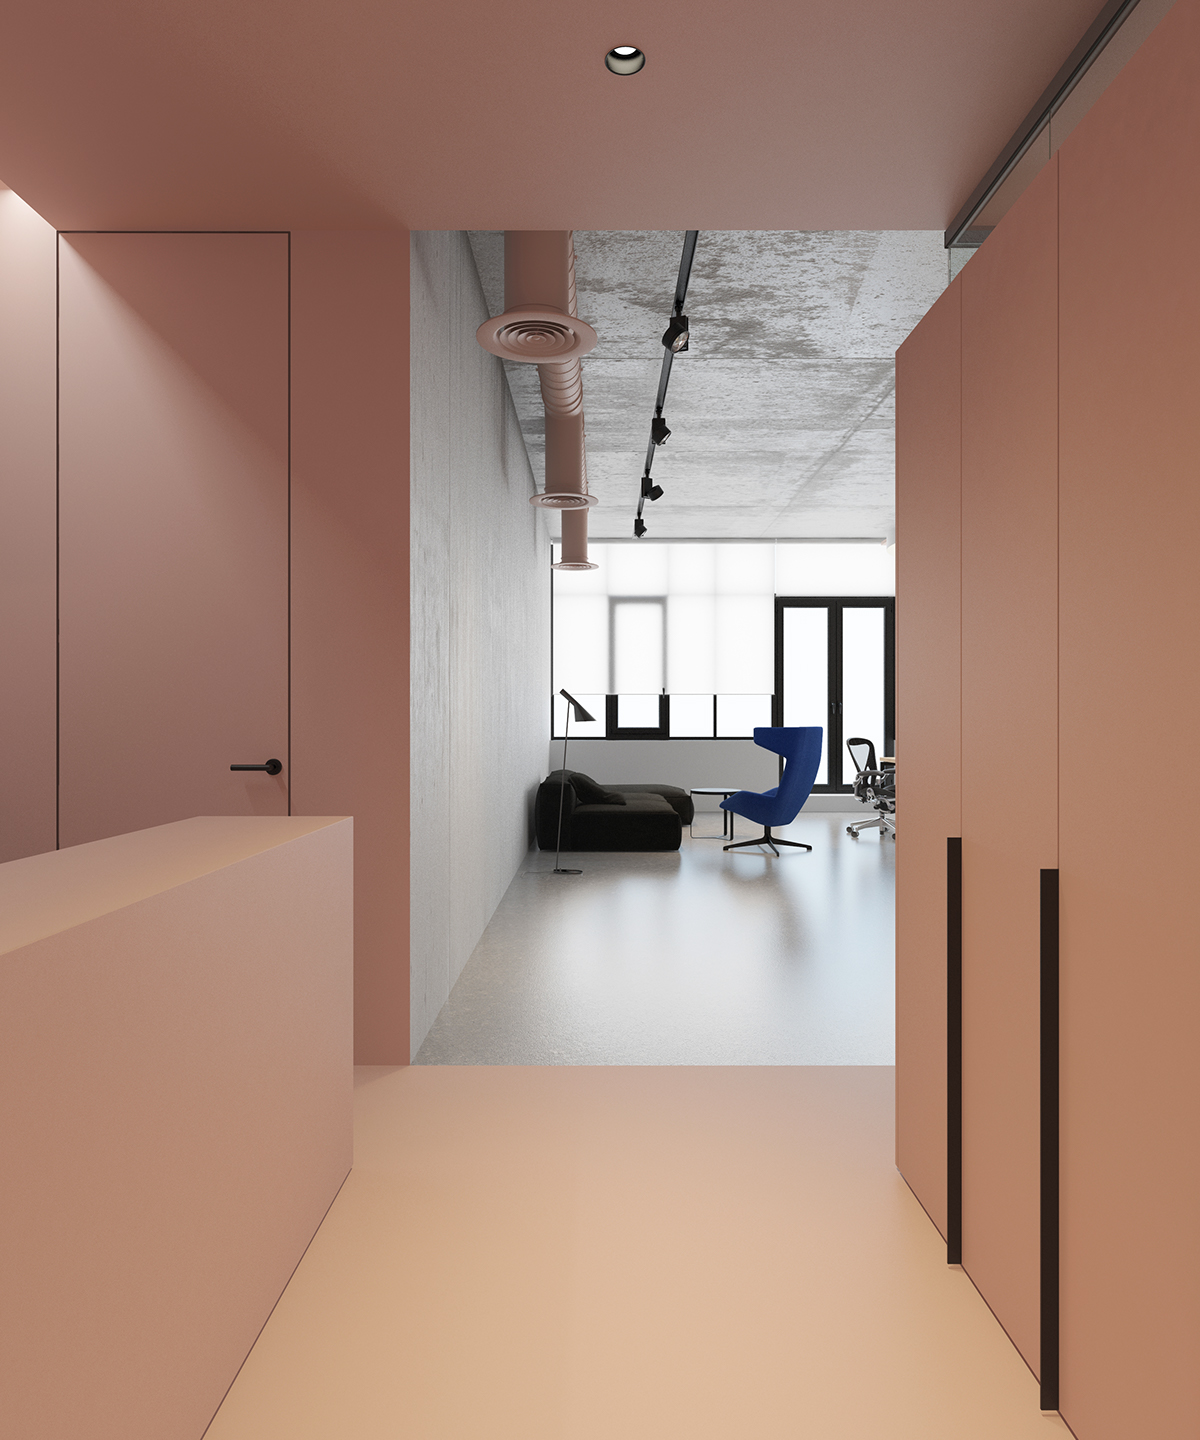 #emildervish officedesign Office pink hay aeronmiller artemide knoll concrete kiev #dtile bathroom dornbracht